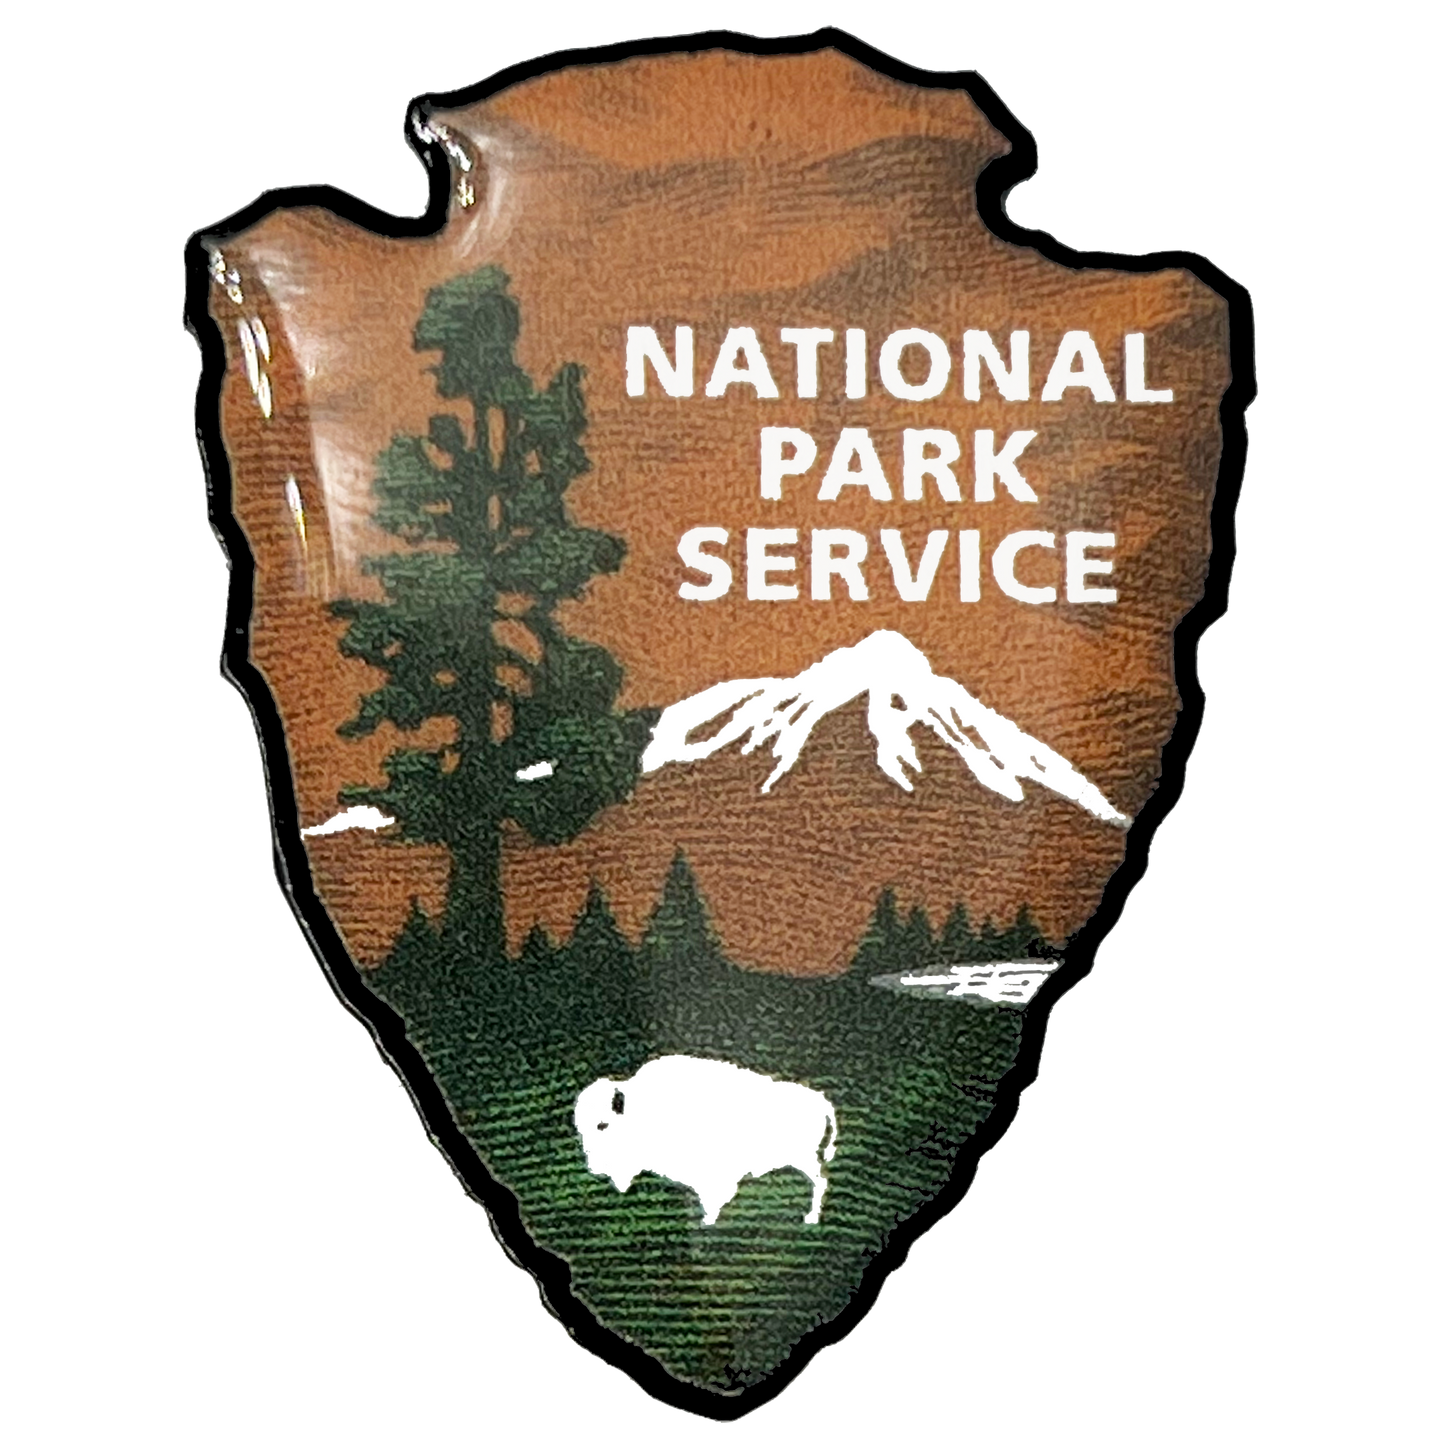 JJ-014 National Park Service Pin NPS US Department of the Interior Law Enforcement Ranger